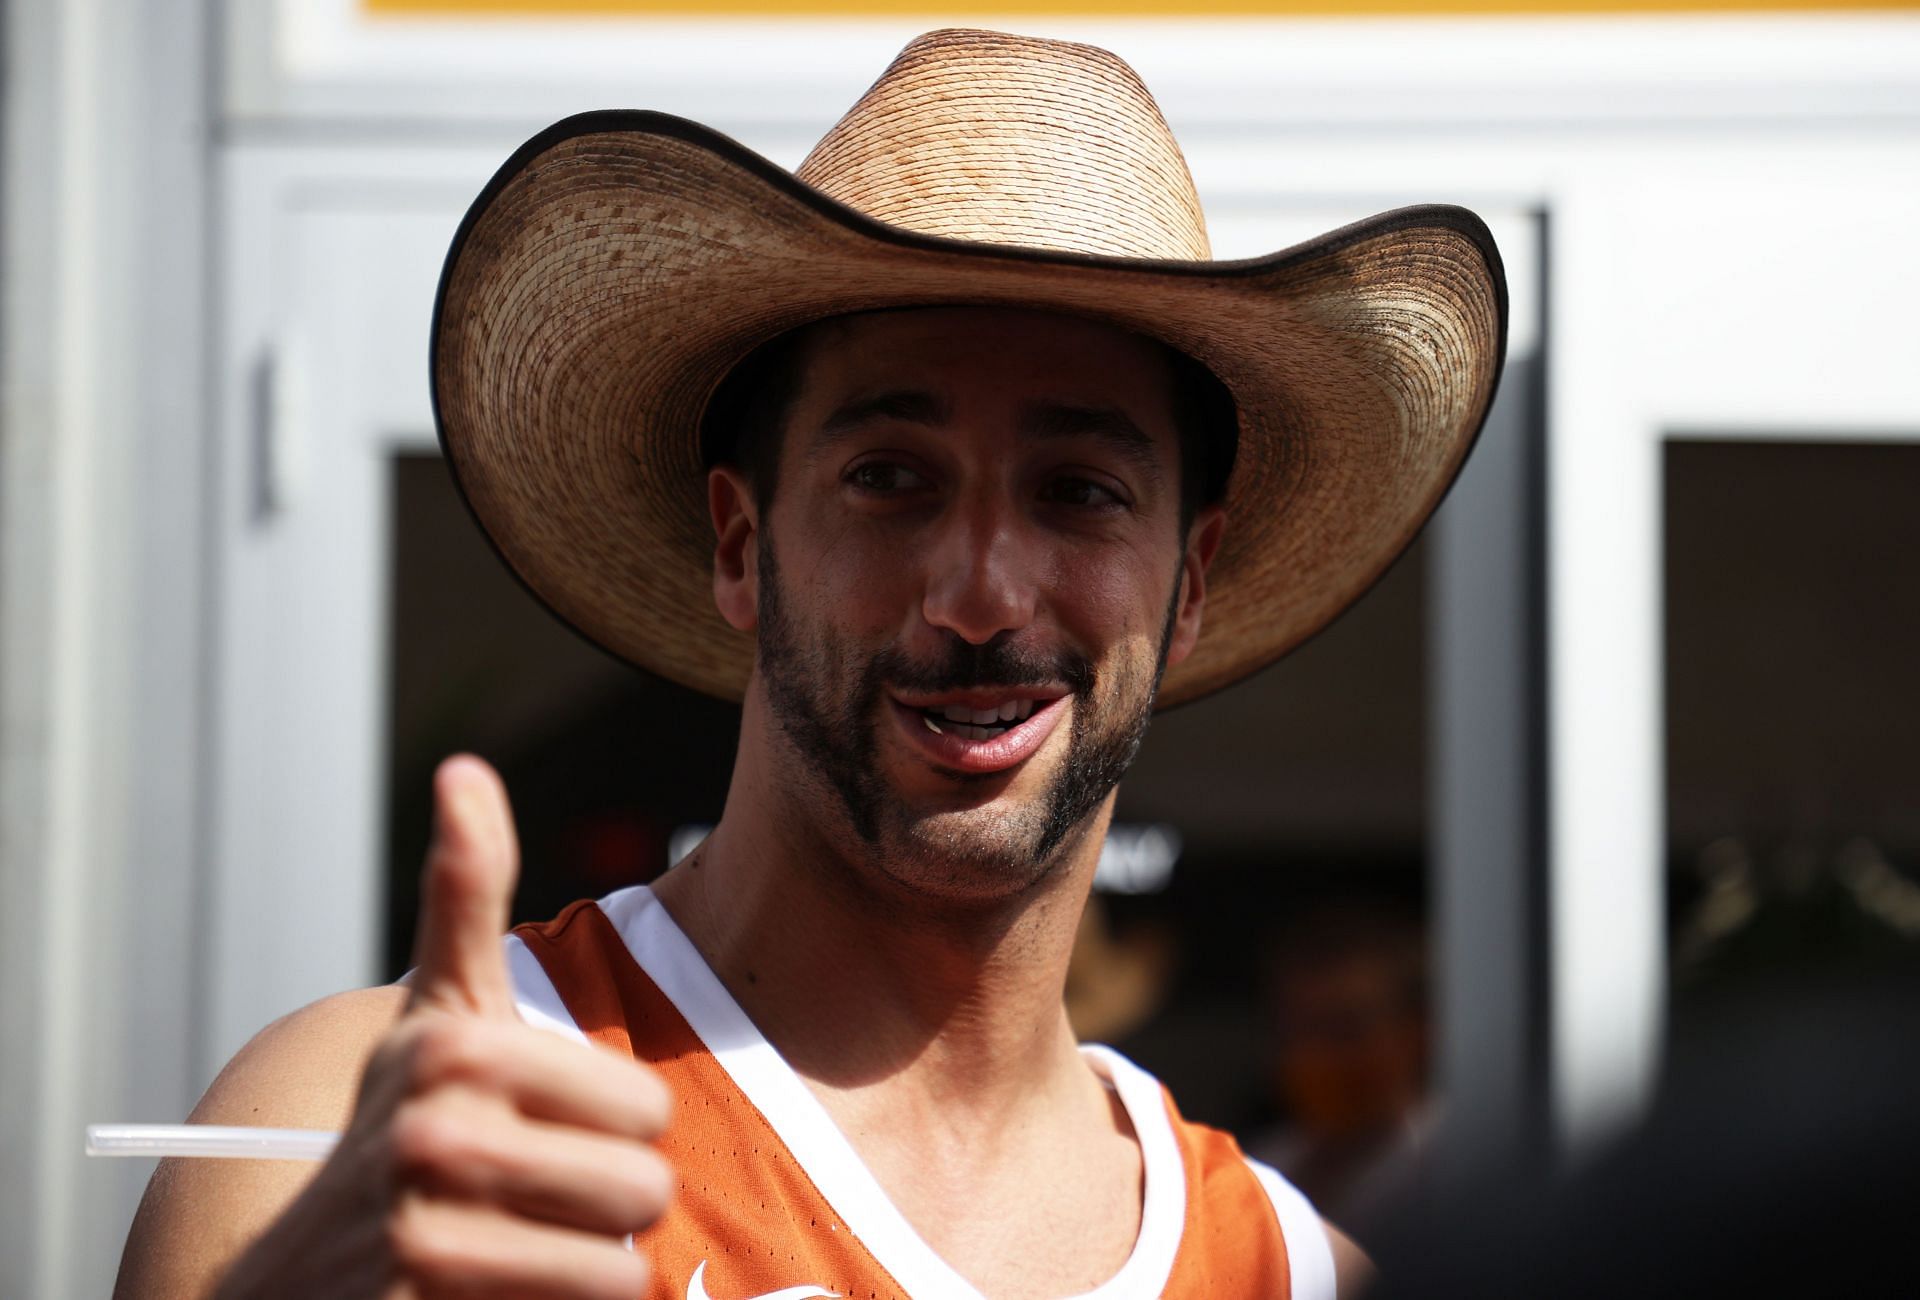 Daniel Ricciardo of McLaren before the 2021 US GP